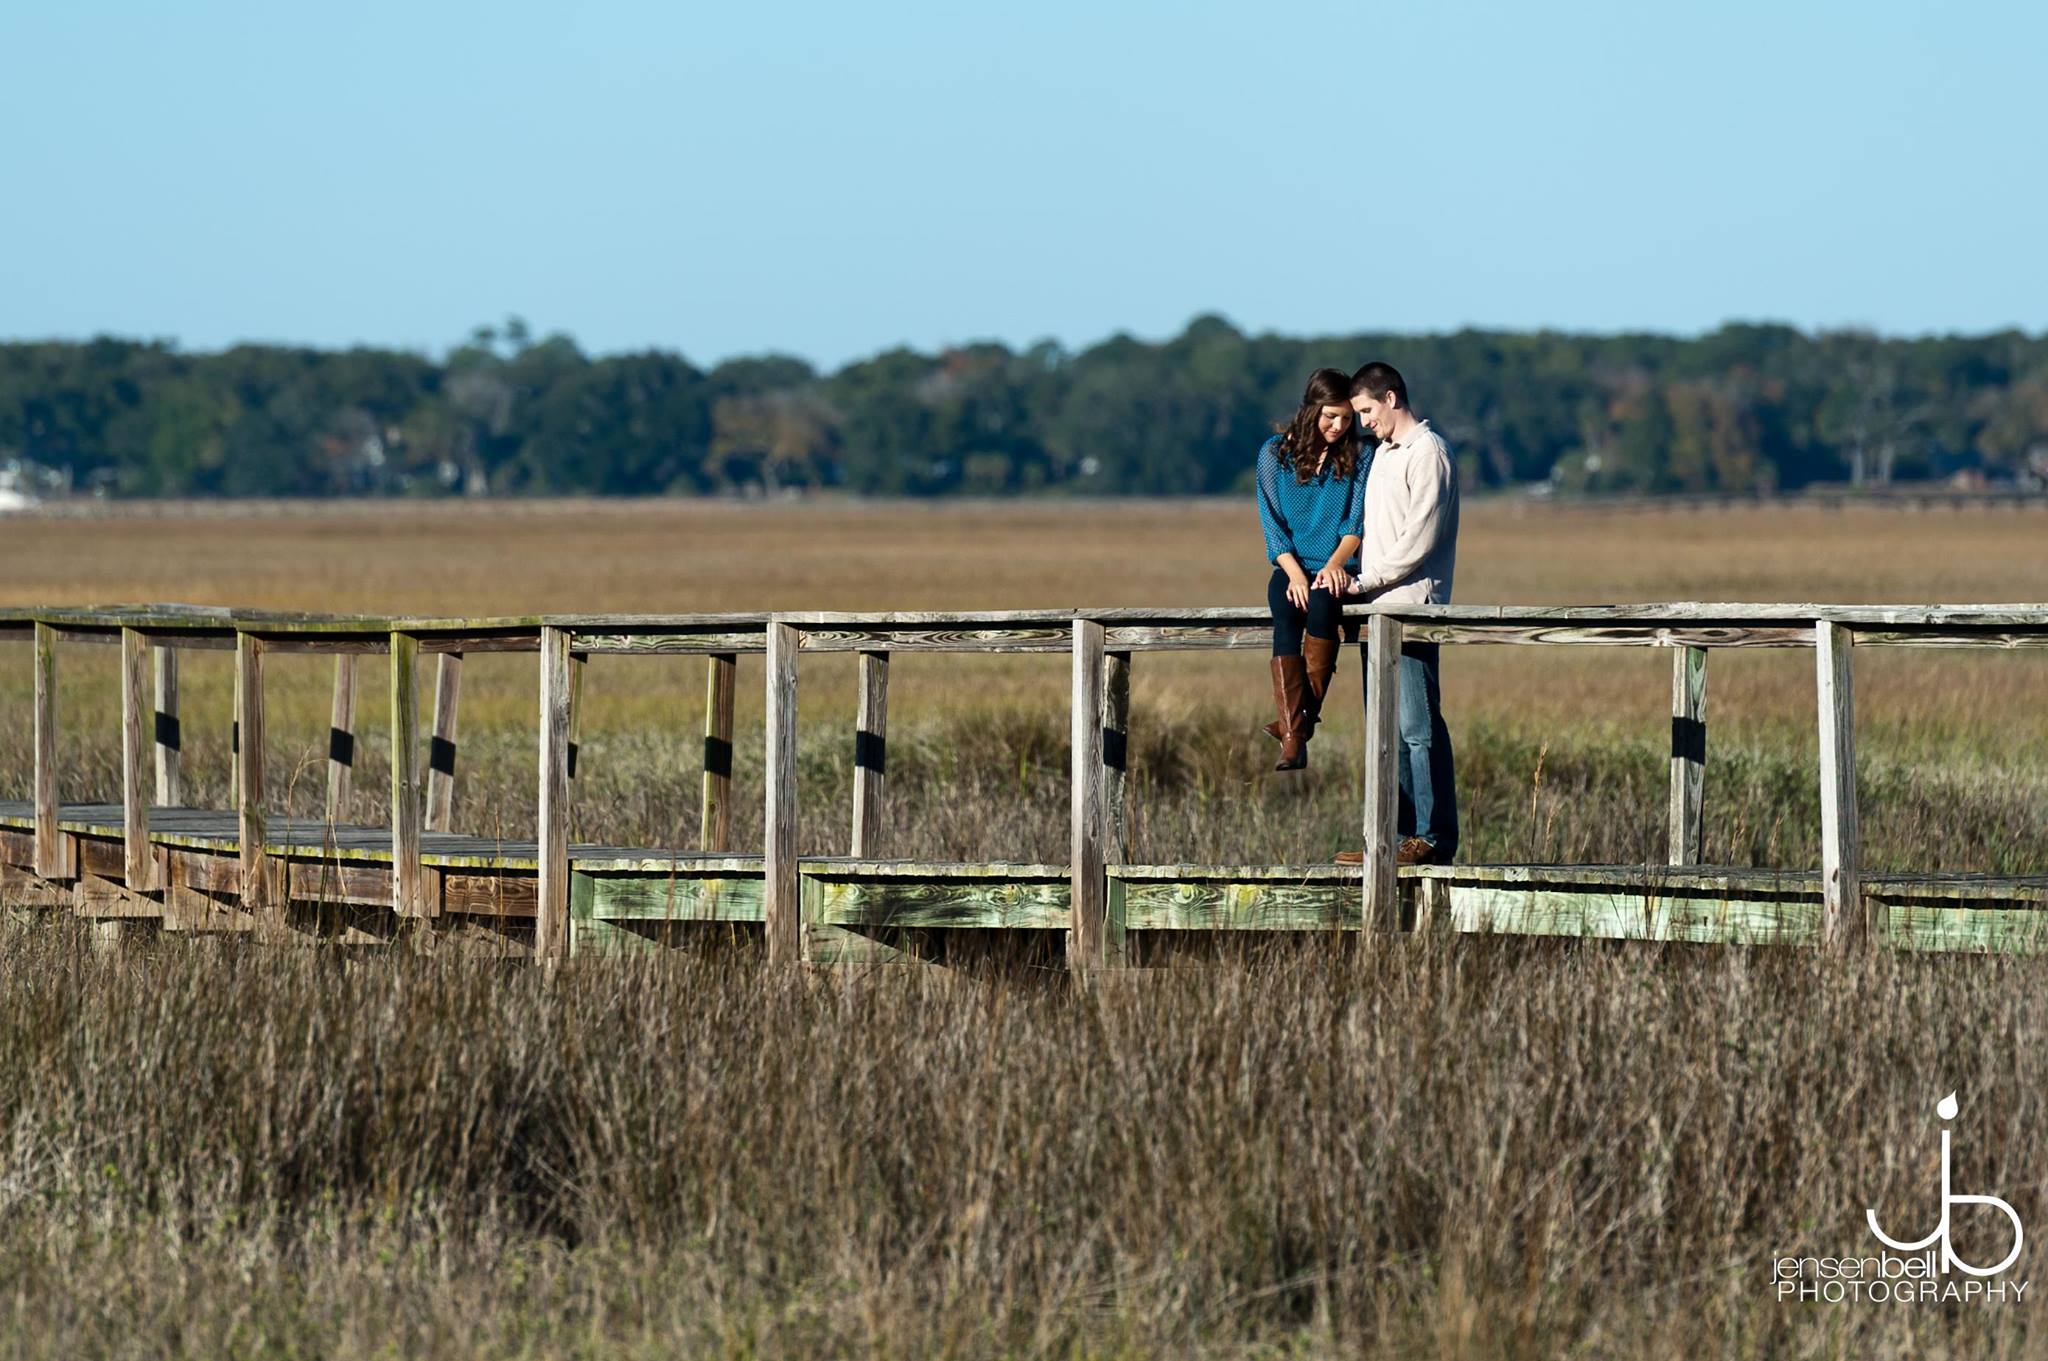 Jensen Bell Photography couple on wooden boardwalk